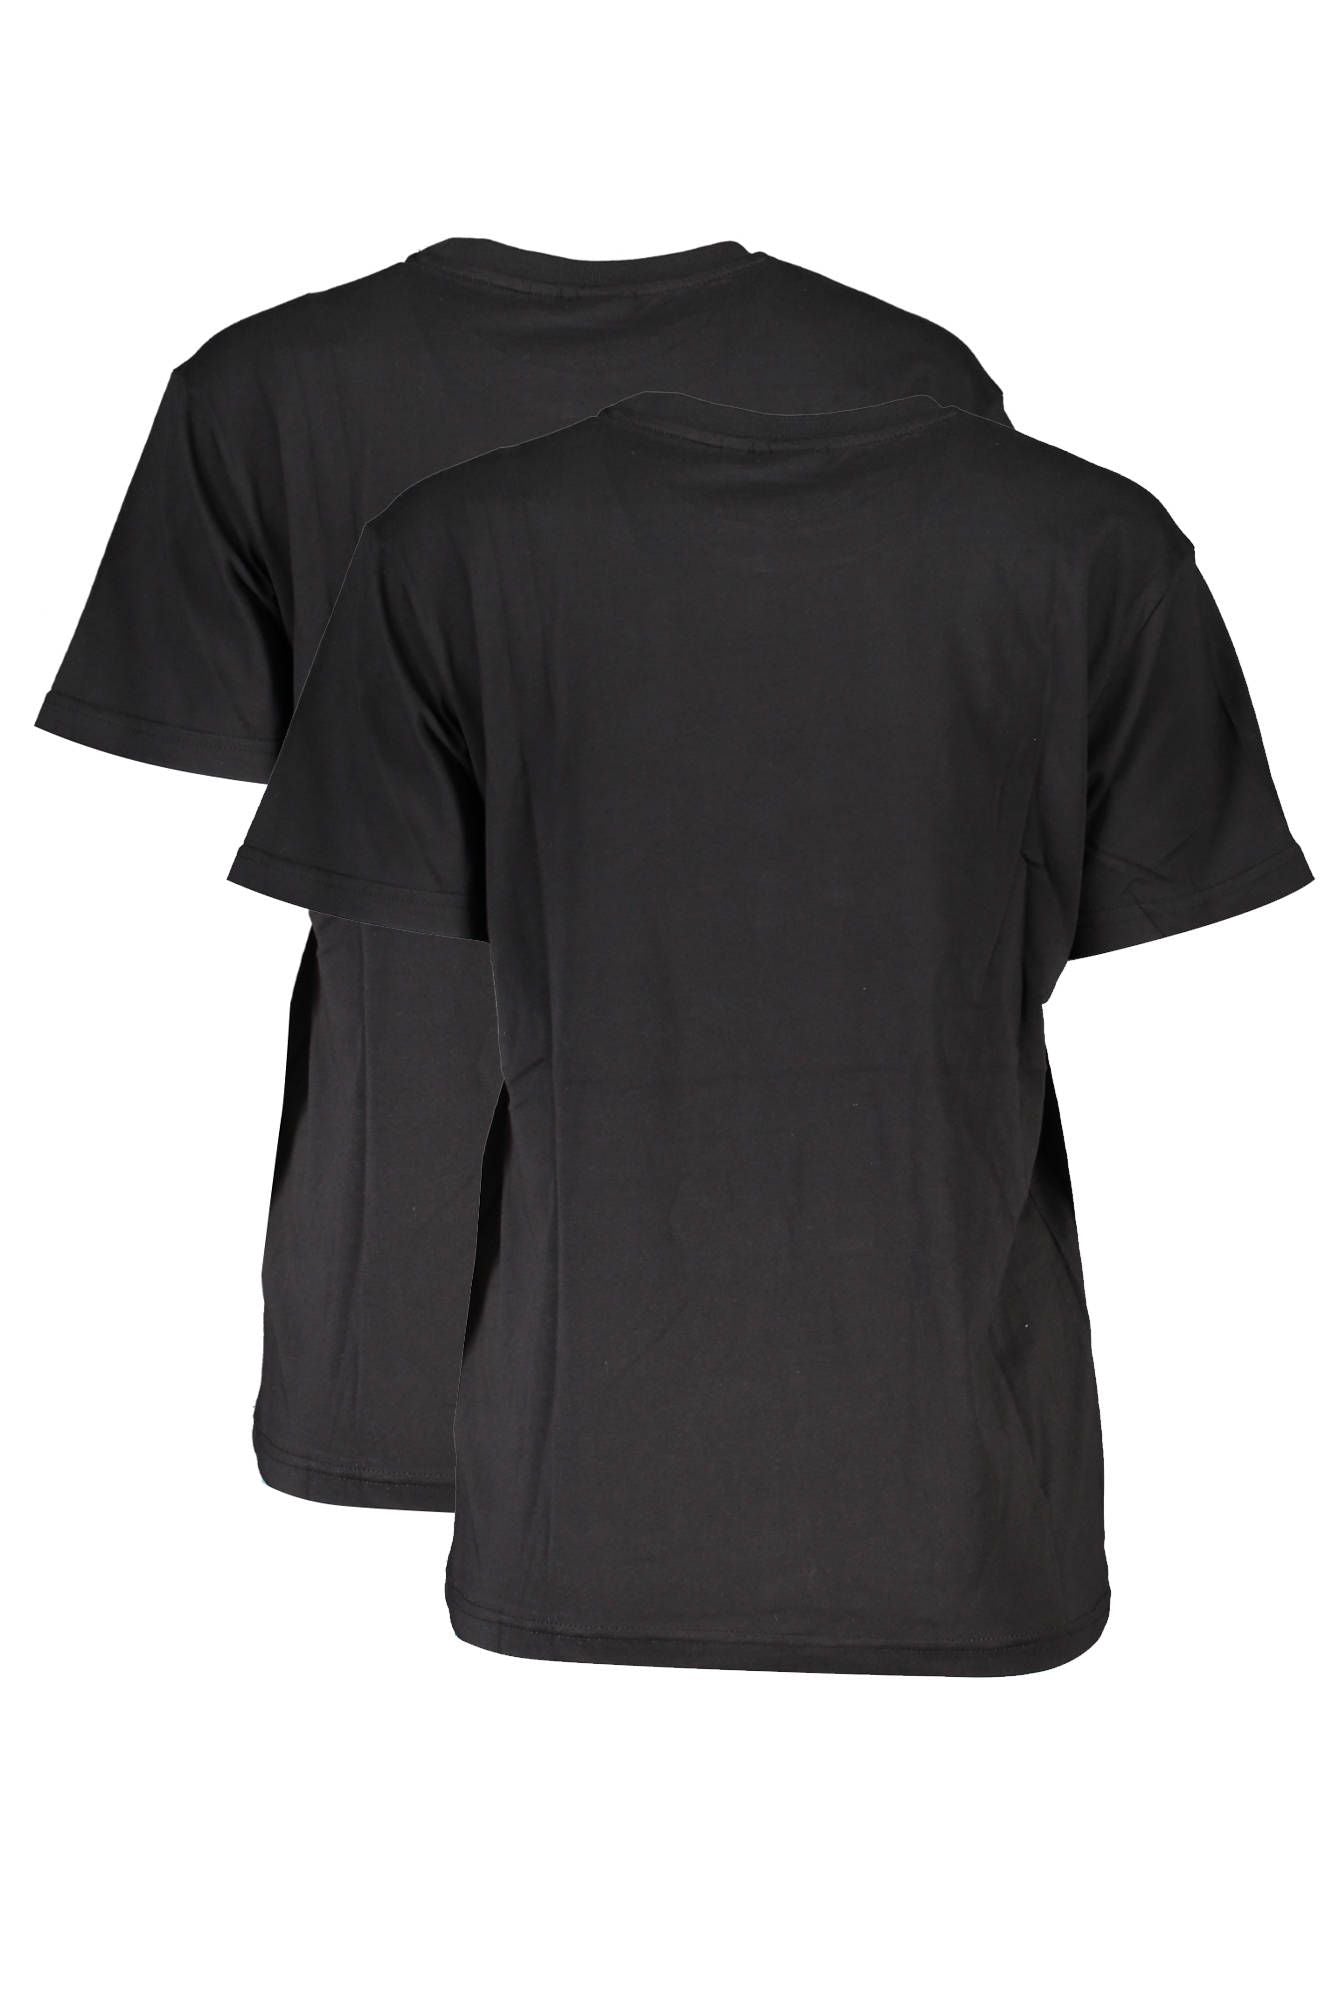 Fila Black Cotton Tops & T-Shirt